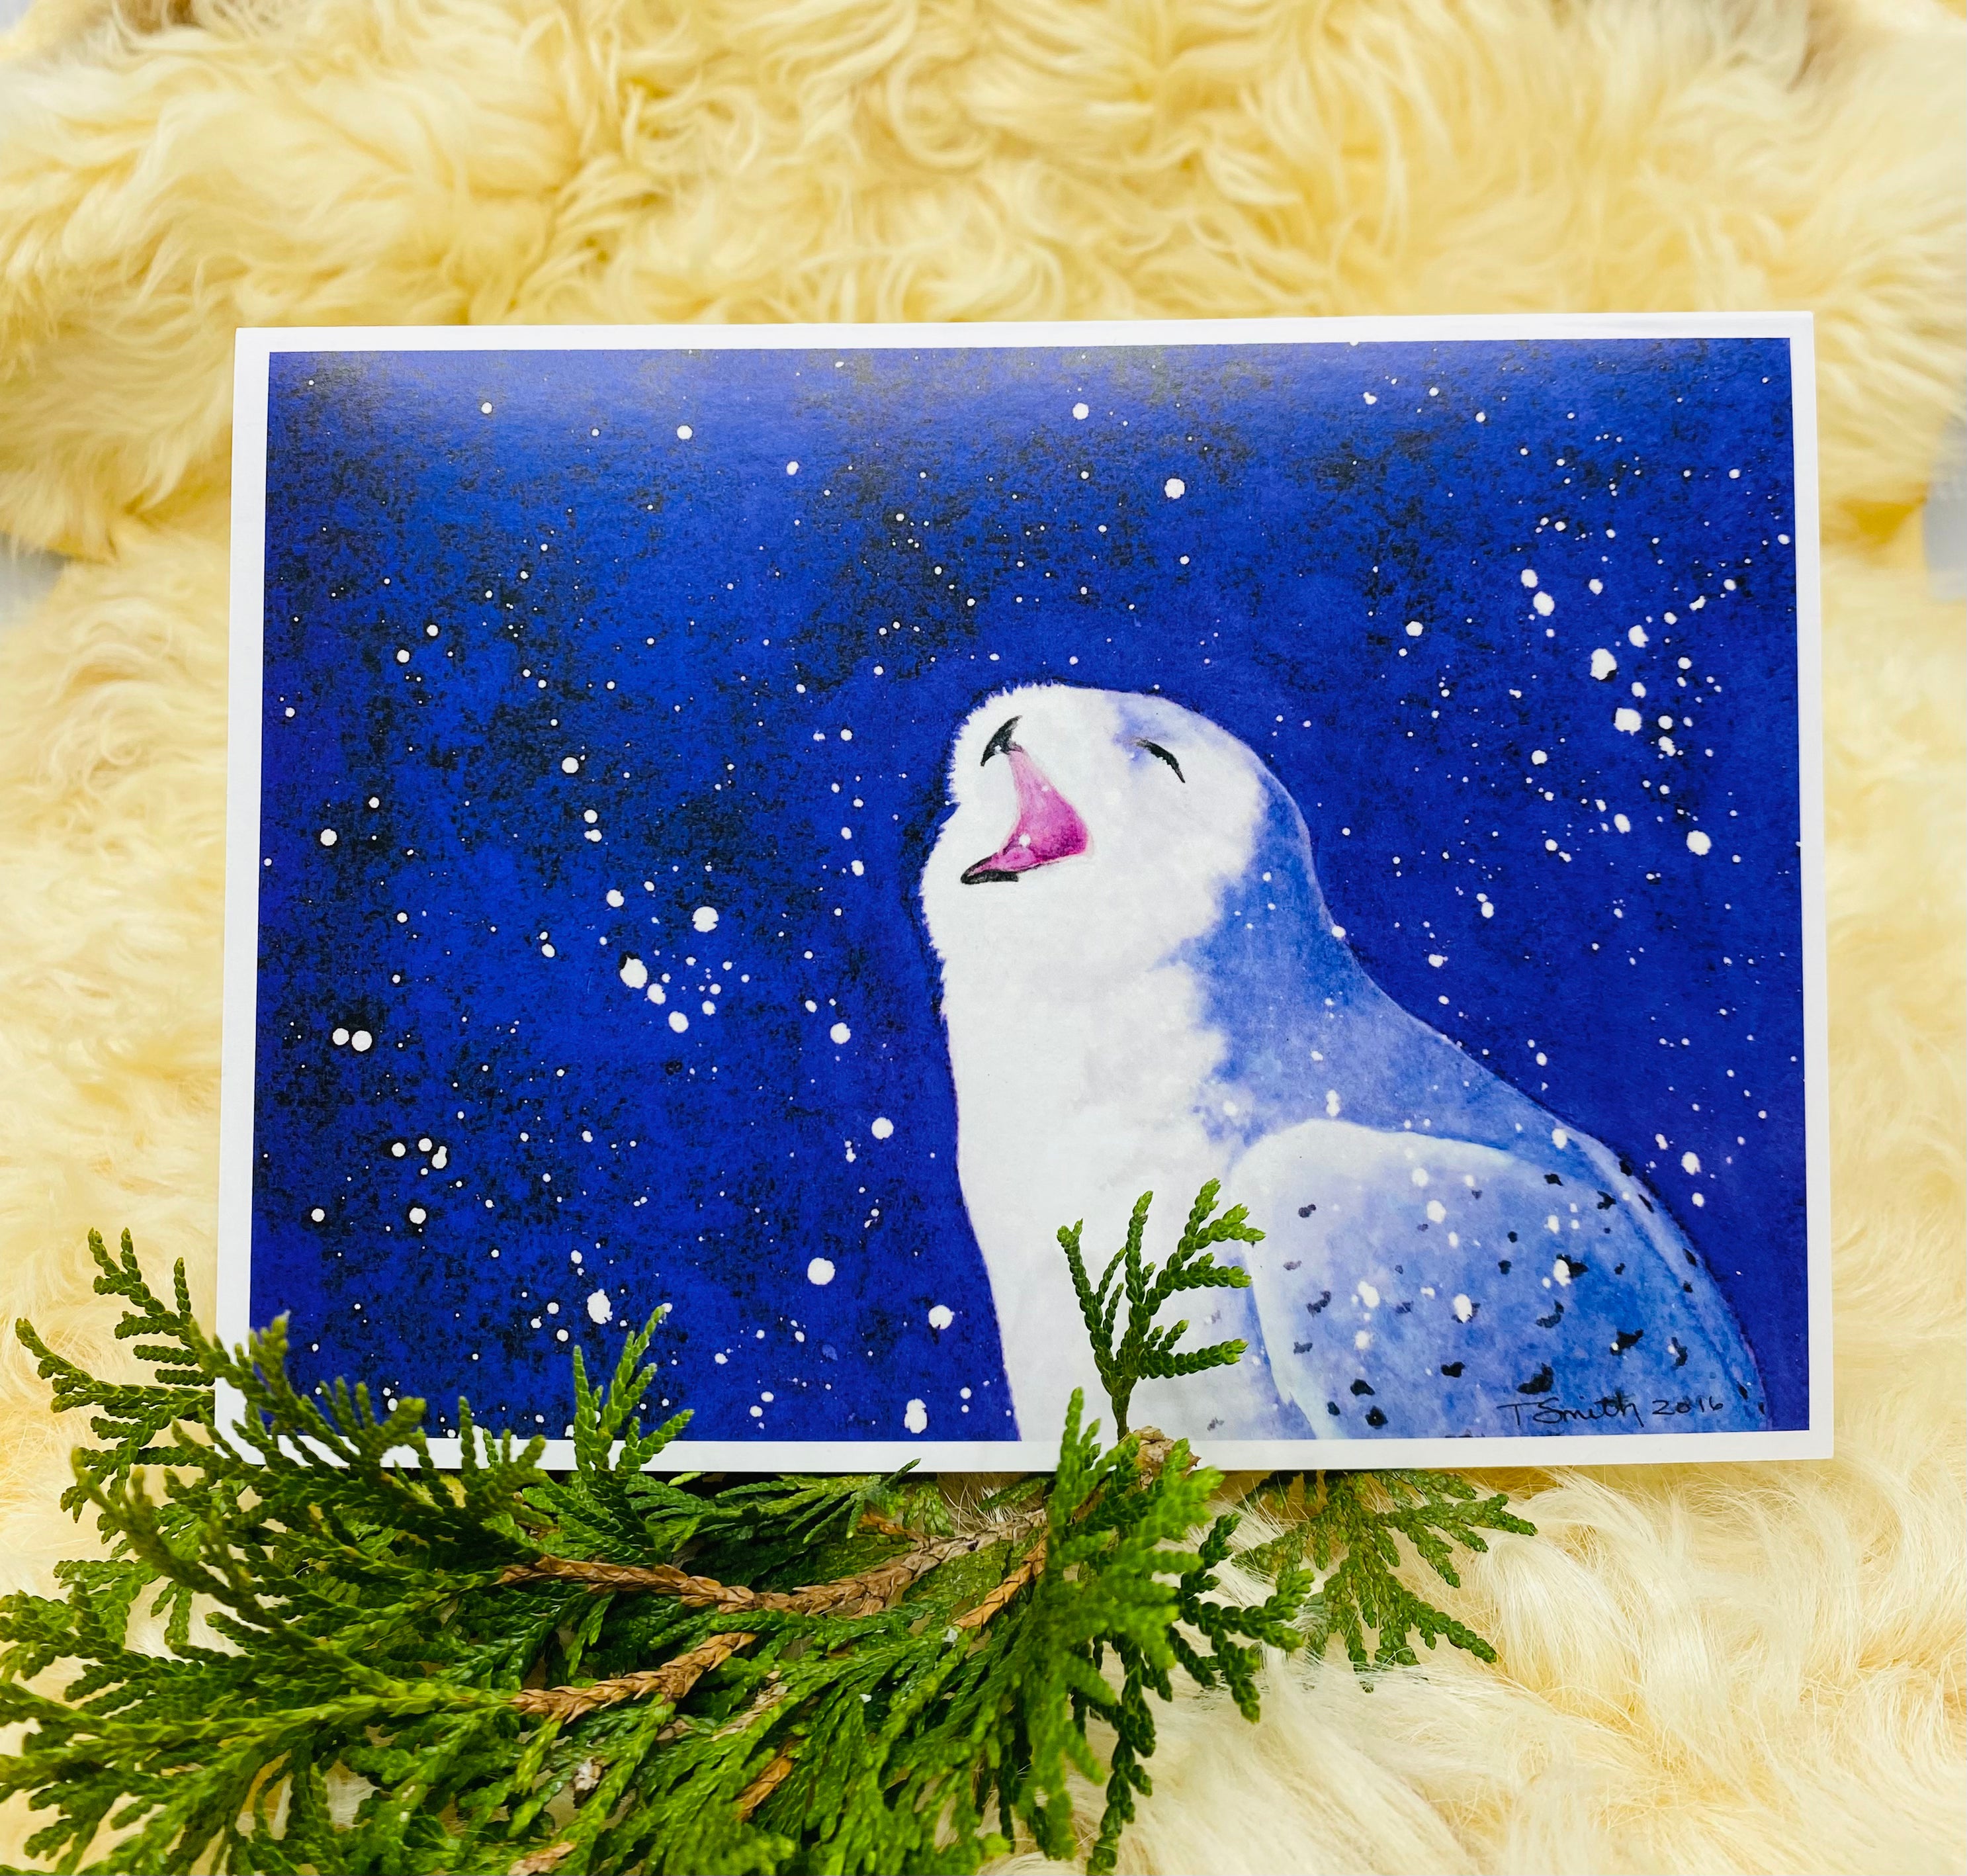 Owl Holiday Card - "Snowy Dreams"